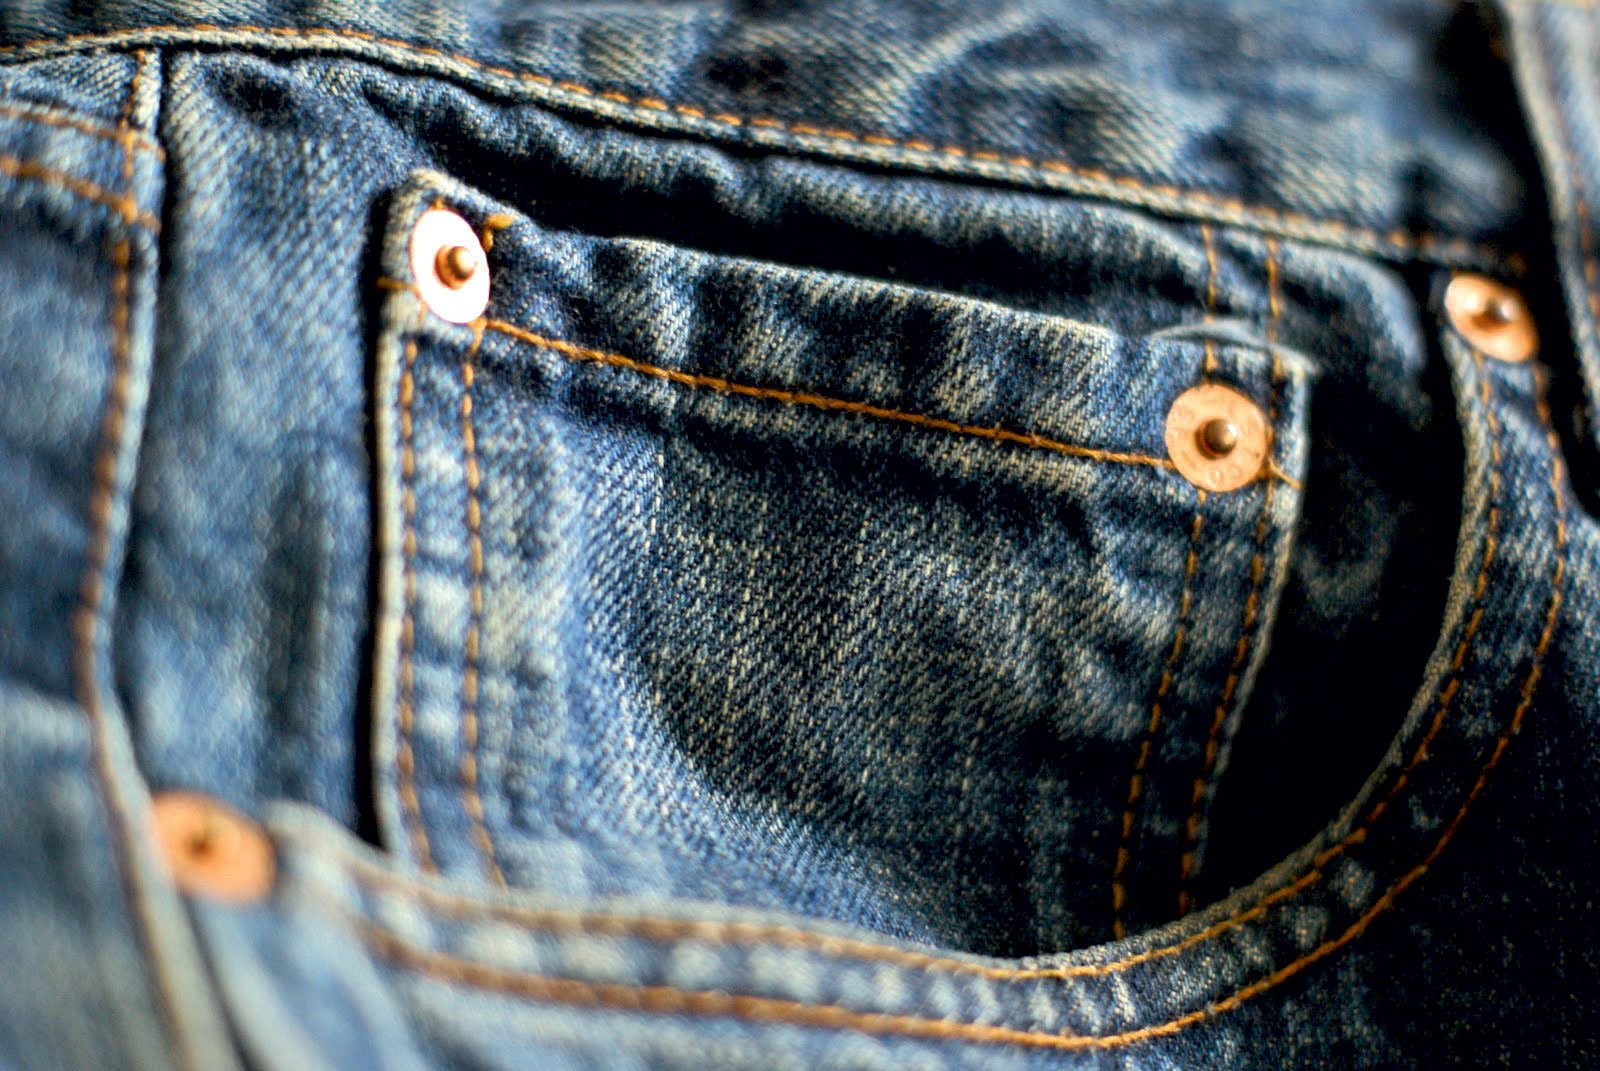 Карманы в джинсах